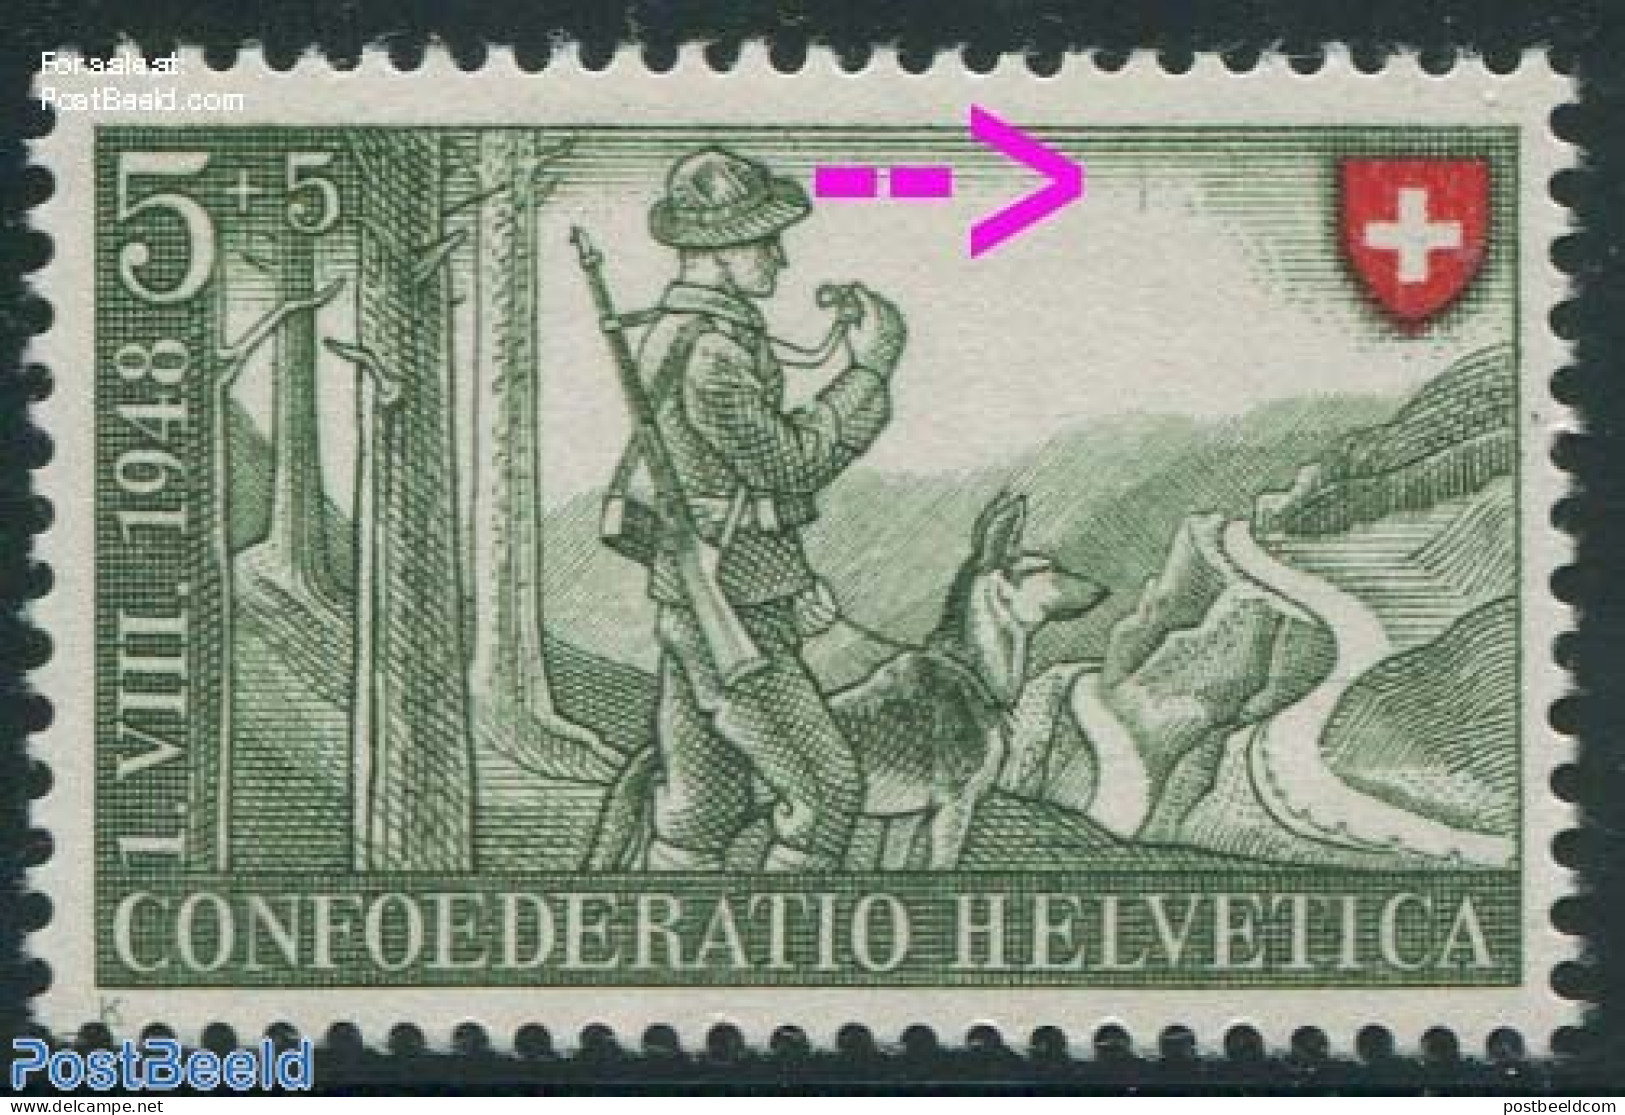 Switzerland 1948 5+5c, Plate Flaw, Vertical Line In Sky, Mint NH, Nature - Various - Dogs - Errors, Misprints, Plate F.. - Ongebruikt